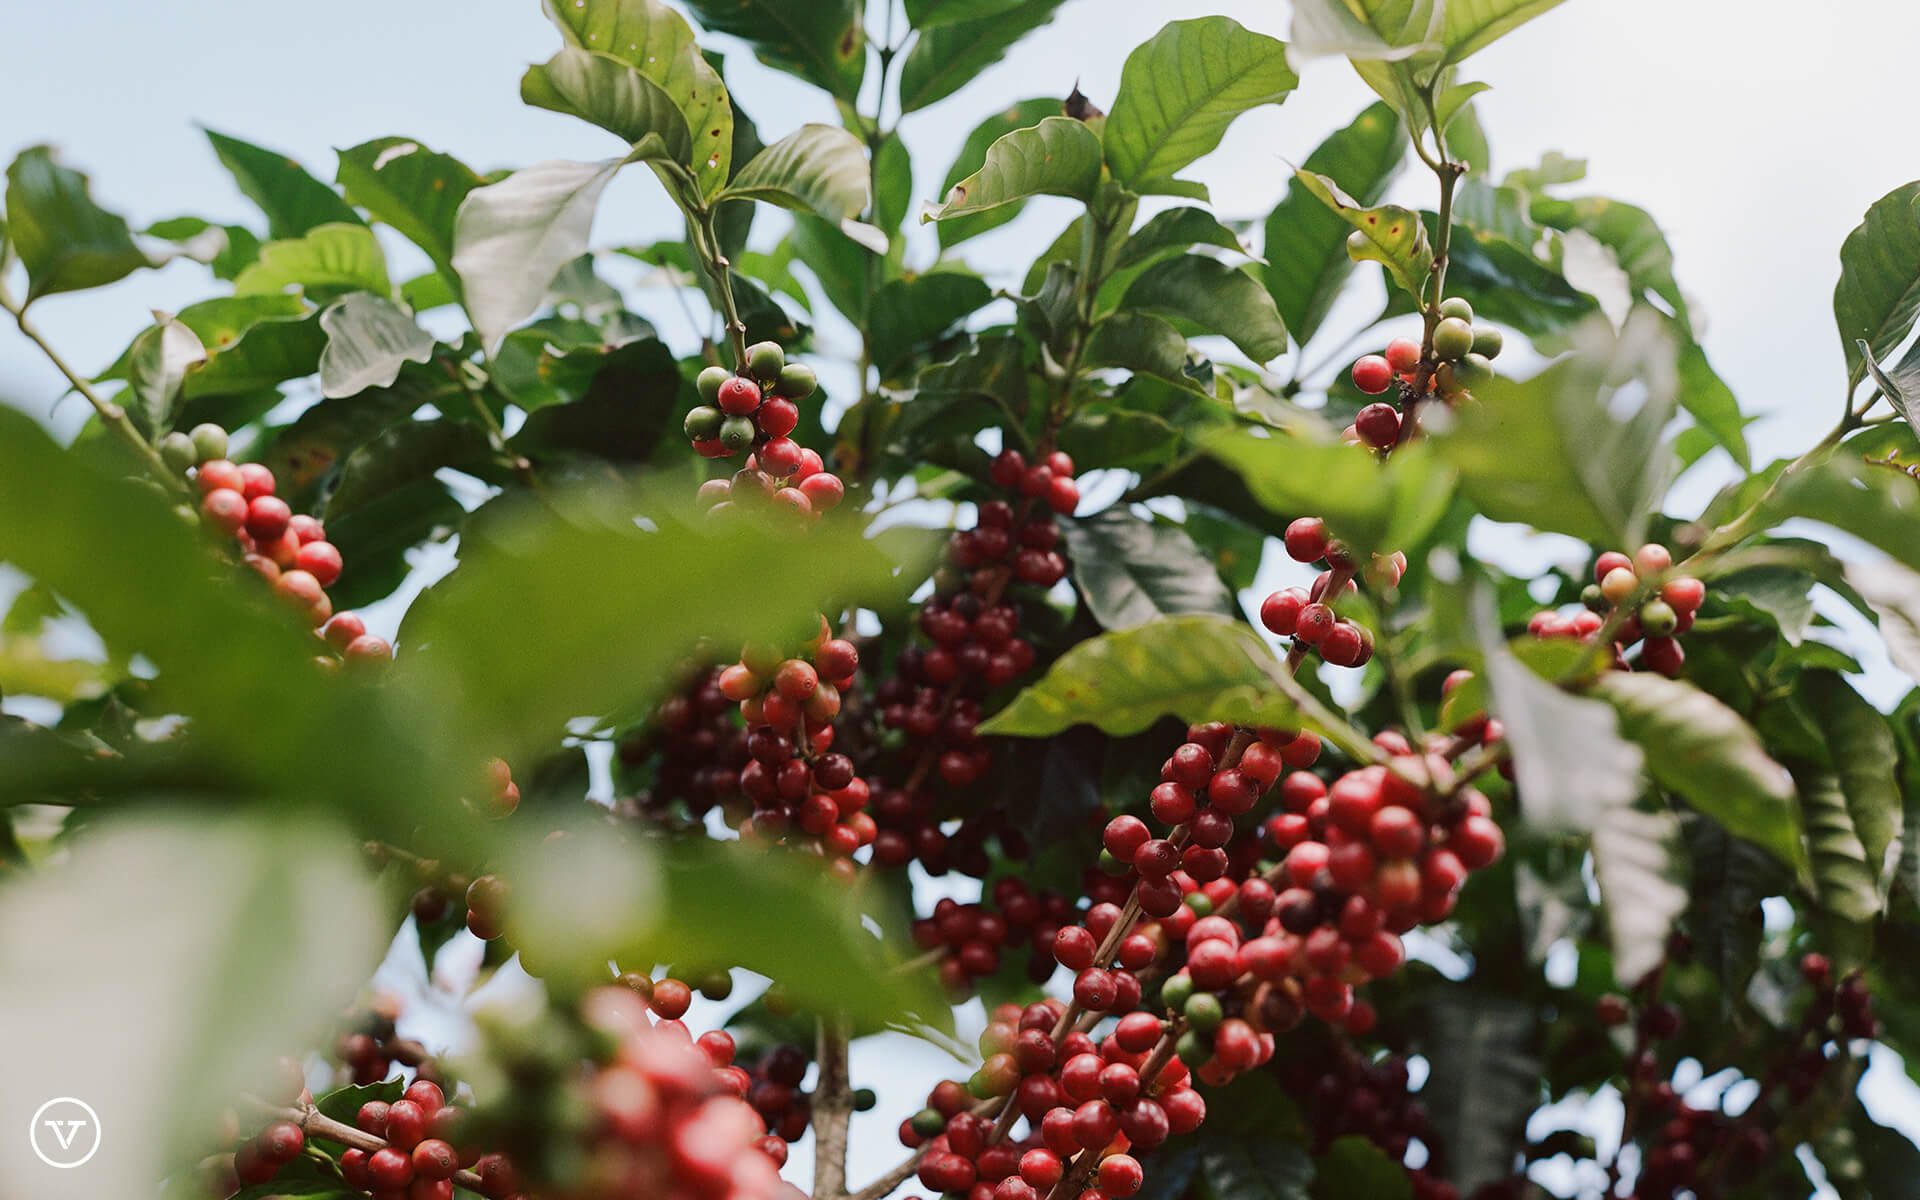 Tree full of ripe coffee cherries in Colombia.